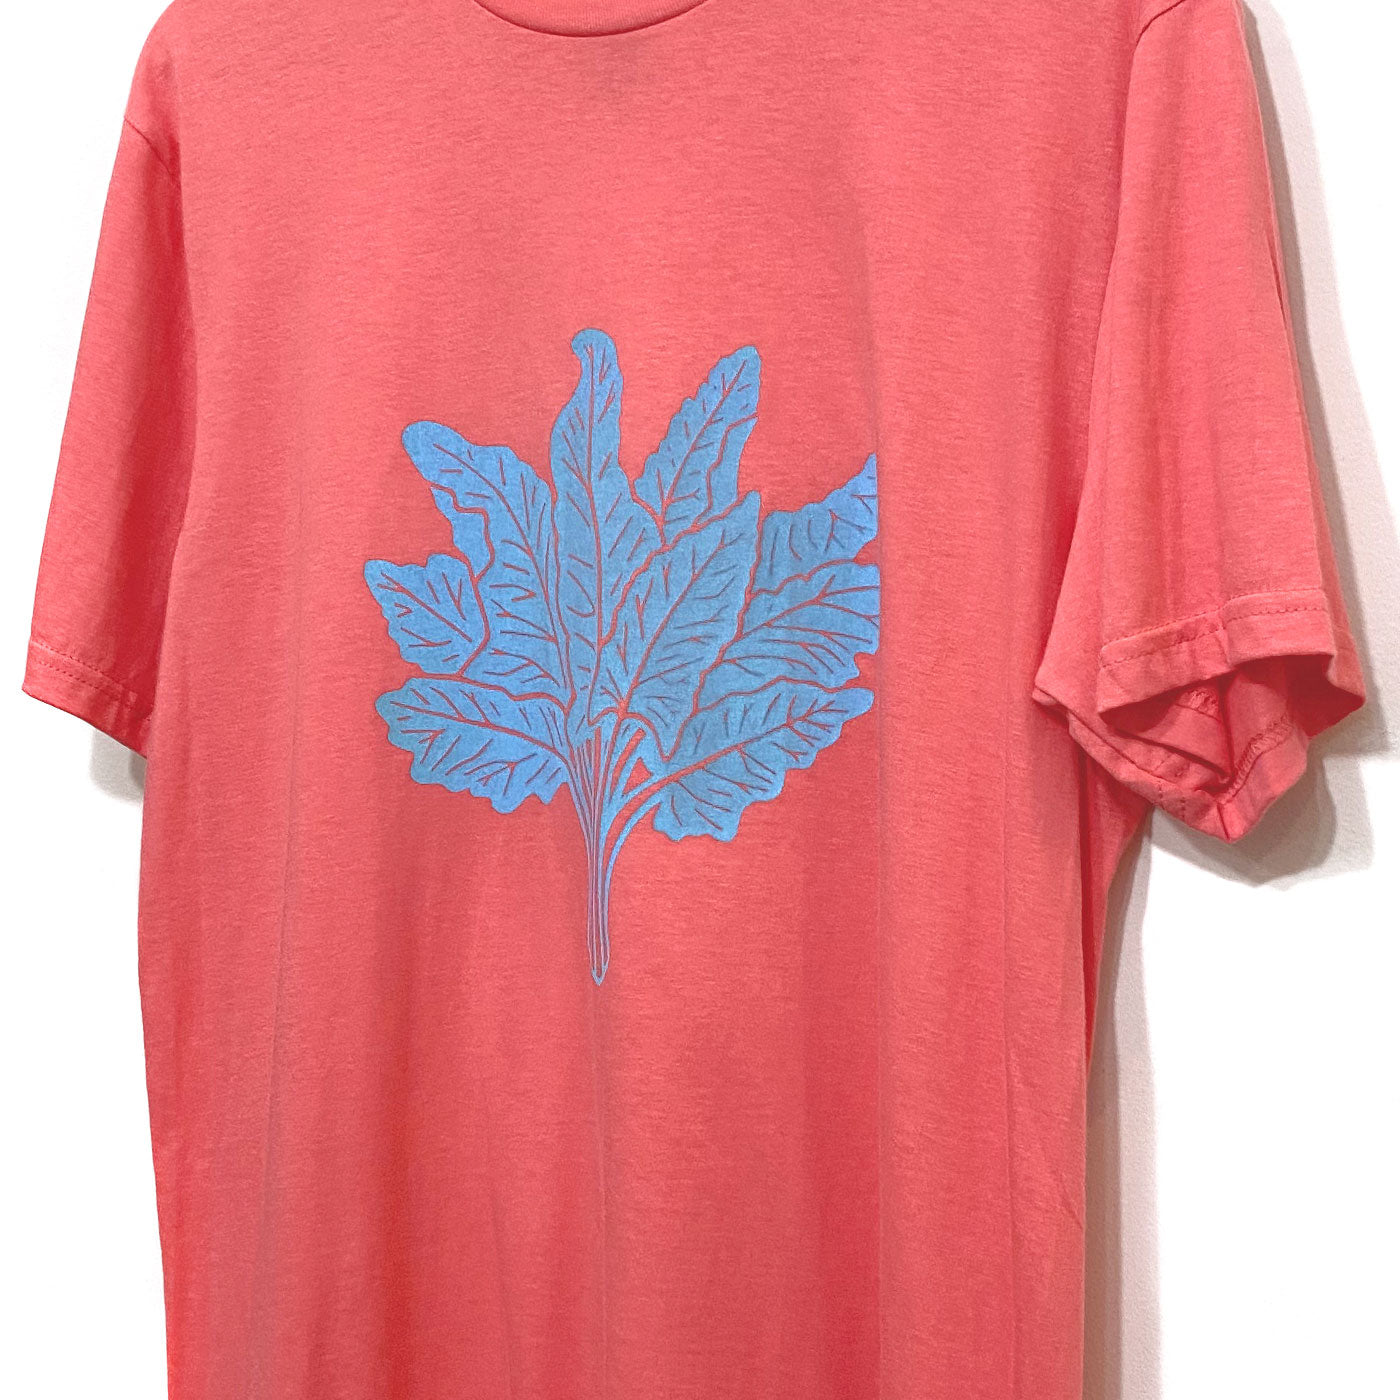 Blue Swiss Chard on Coral T-Shirt